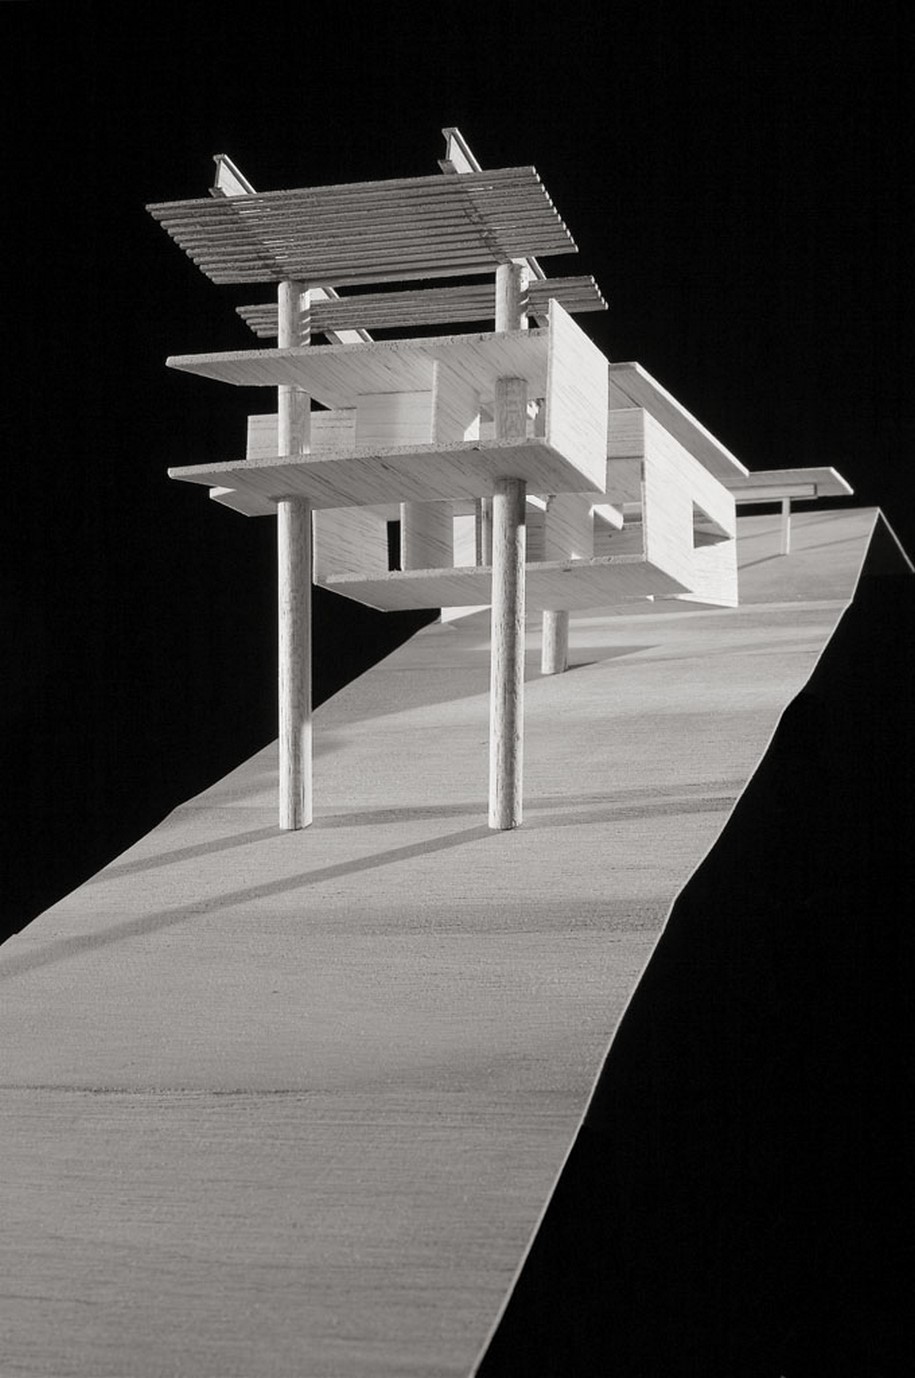 spbr arquitetos, HOUSE IN UBATUBA, Brazil, 2009, concrete, model